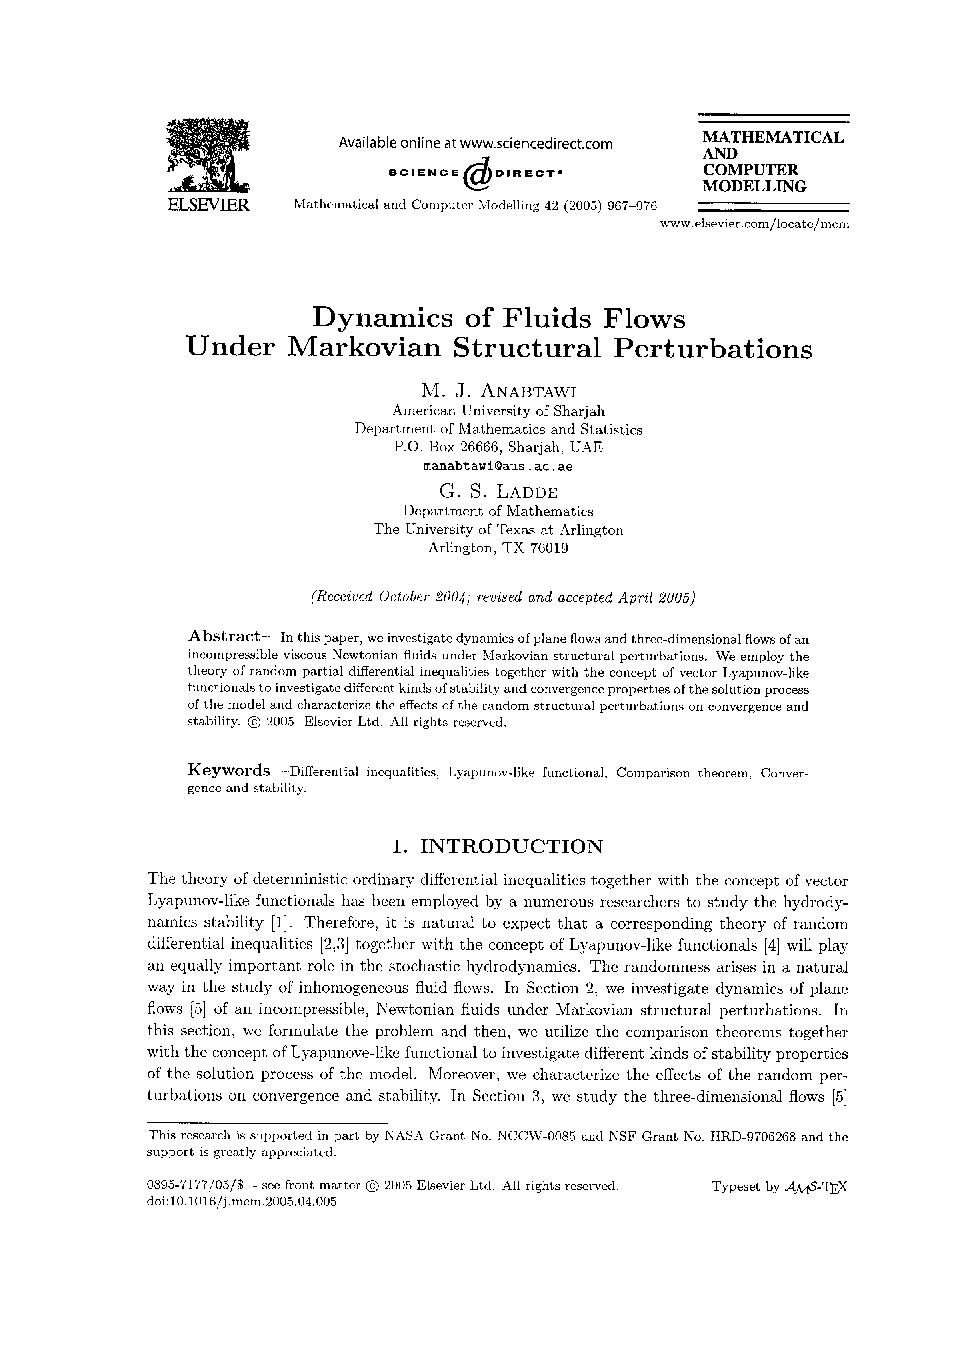 Dynamics of fluids flows under Markovian structural perturbations